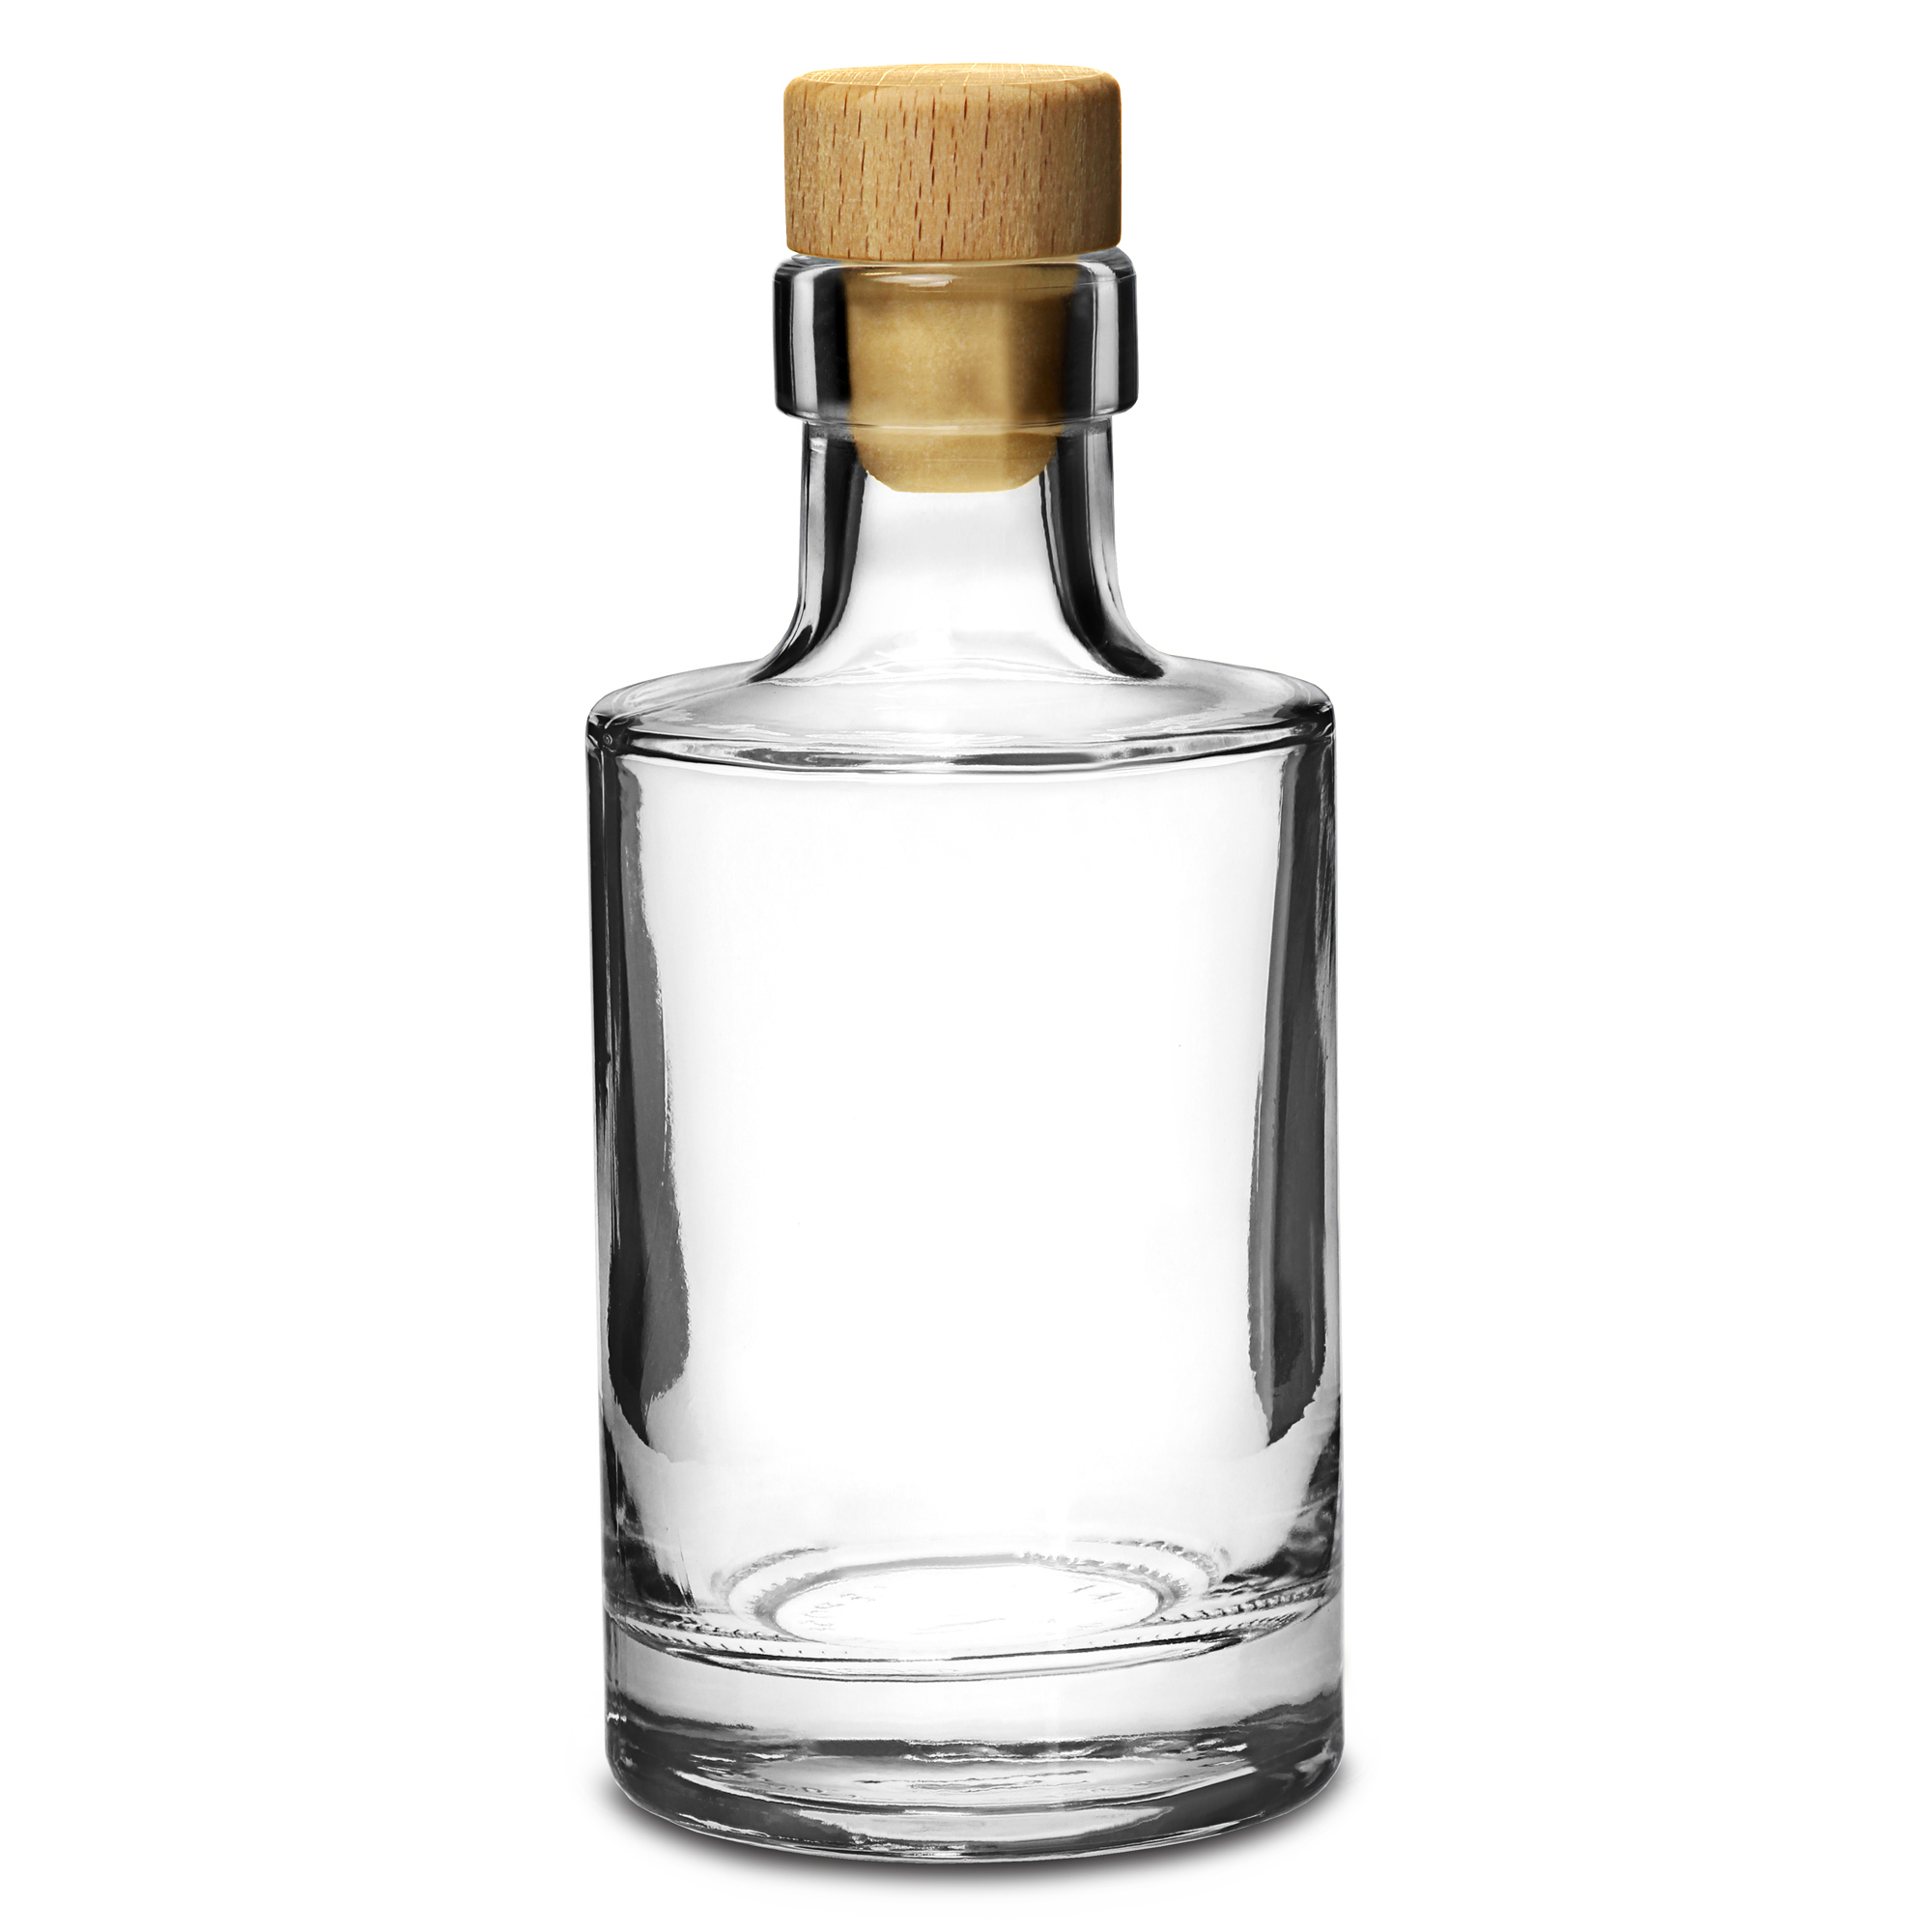 Бутылочка 200 мл. Водочная стеклобутылка 100мл. Spendrus 330 ml GLASSPAK прозрачная бутылка. Бутылка Бэлл 200 мл.